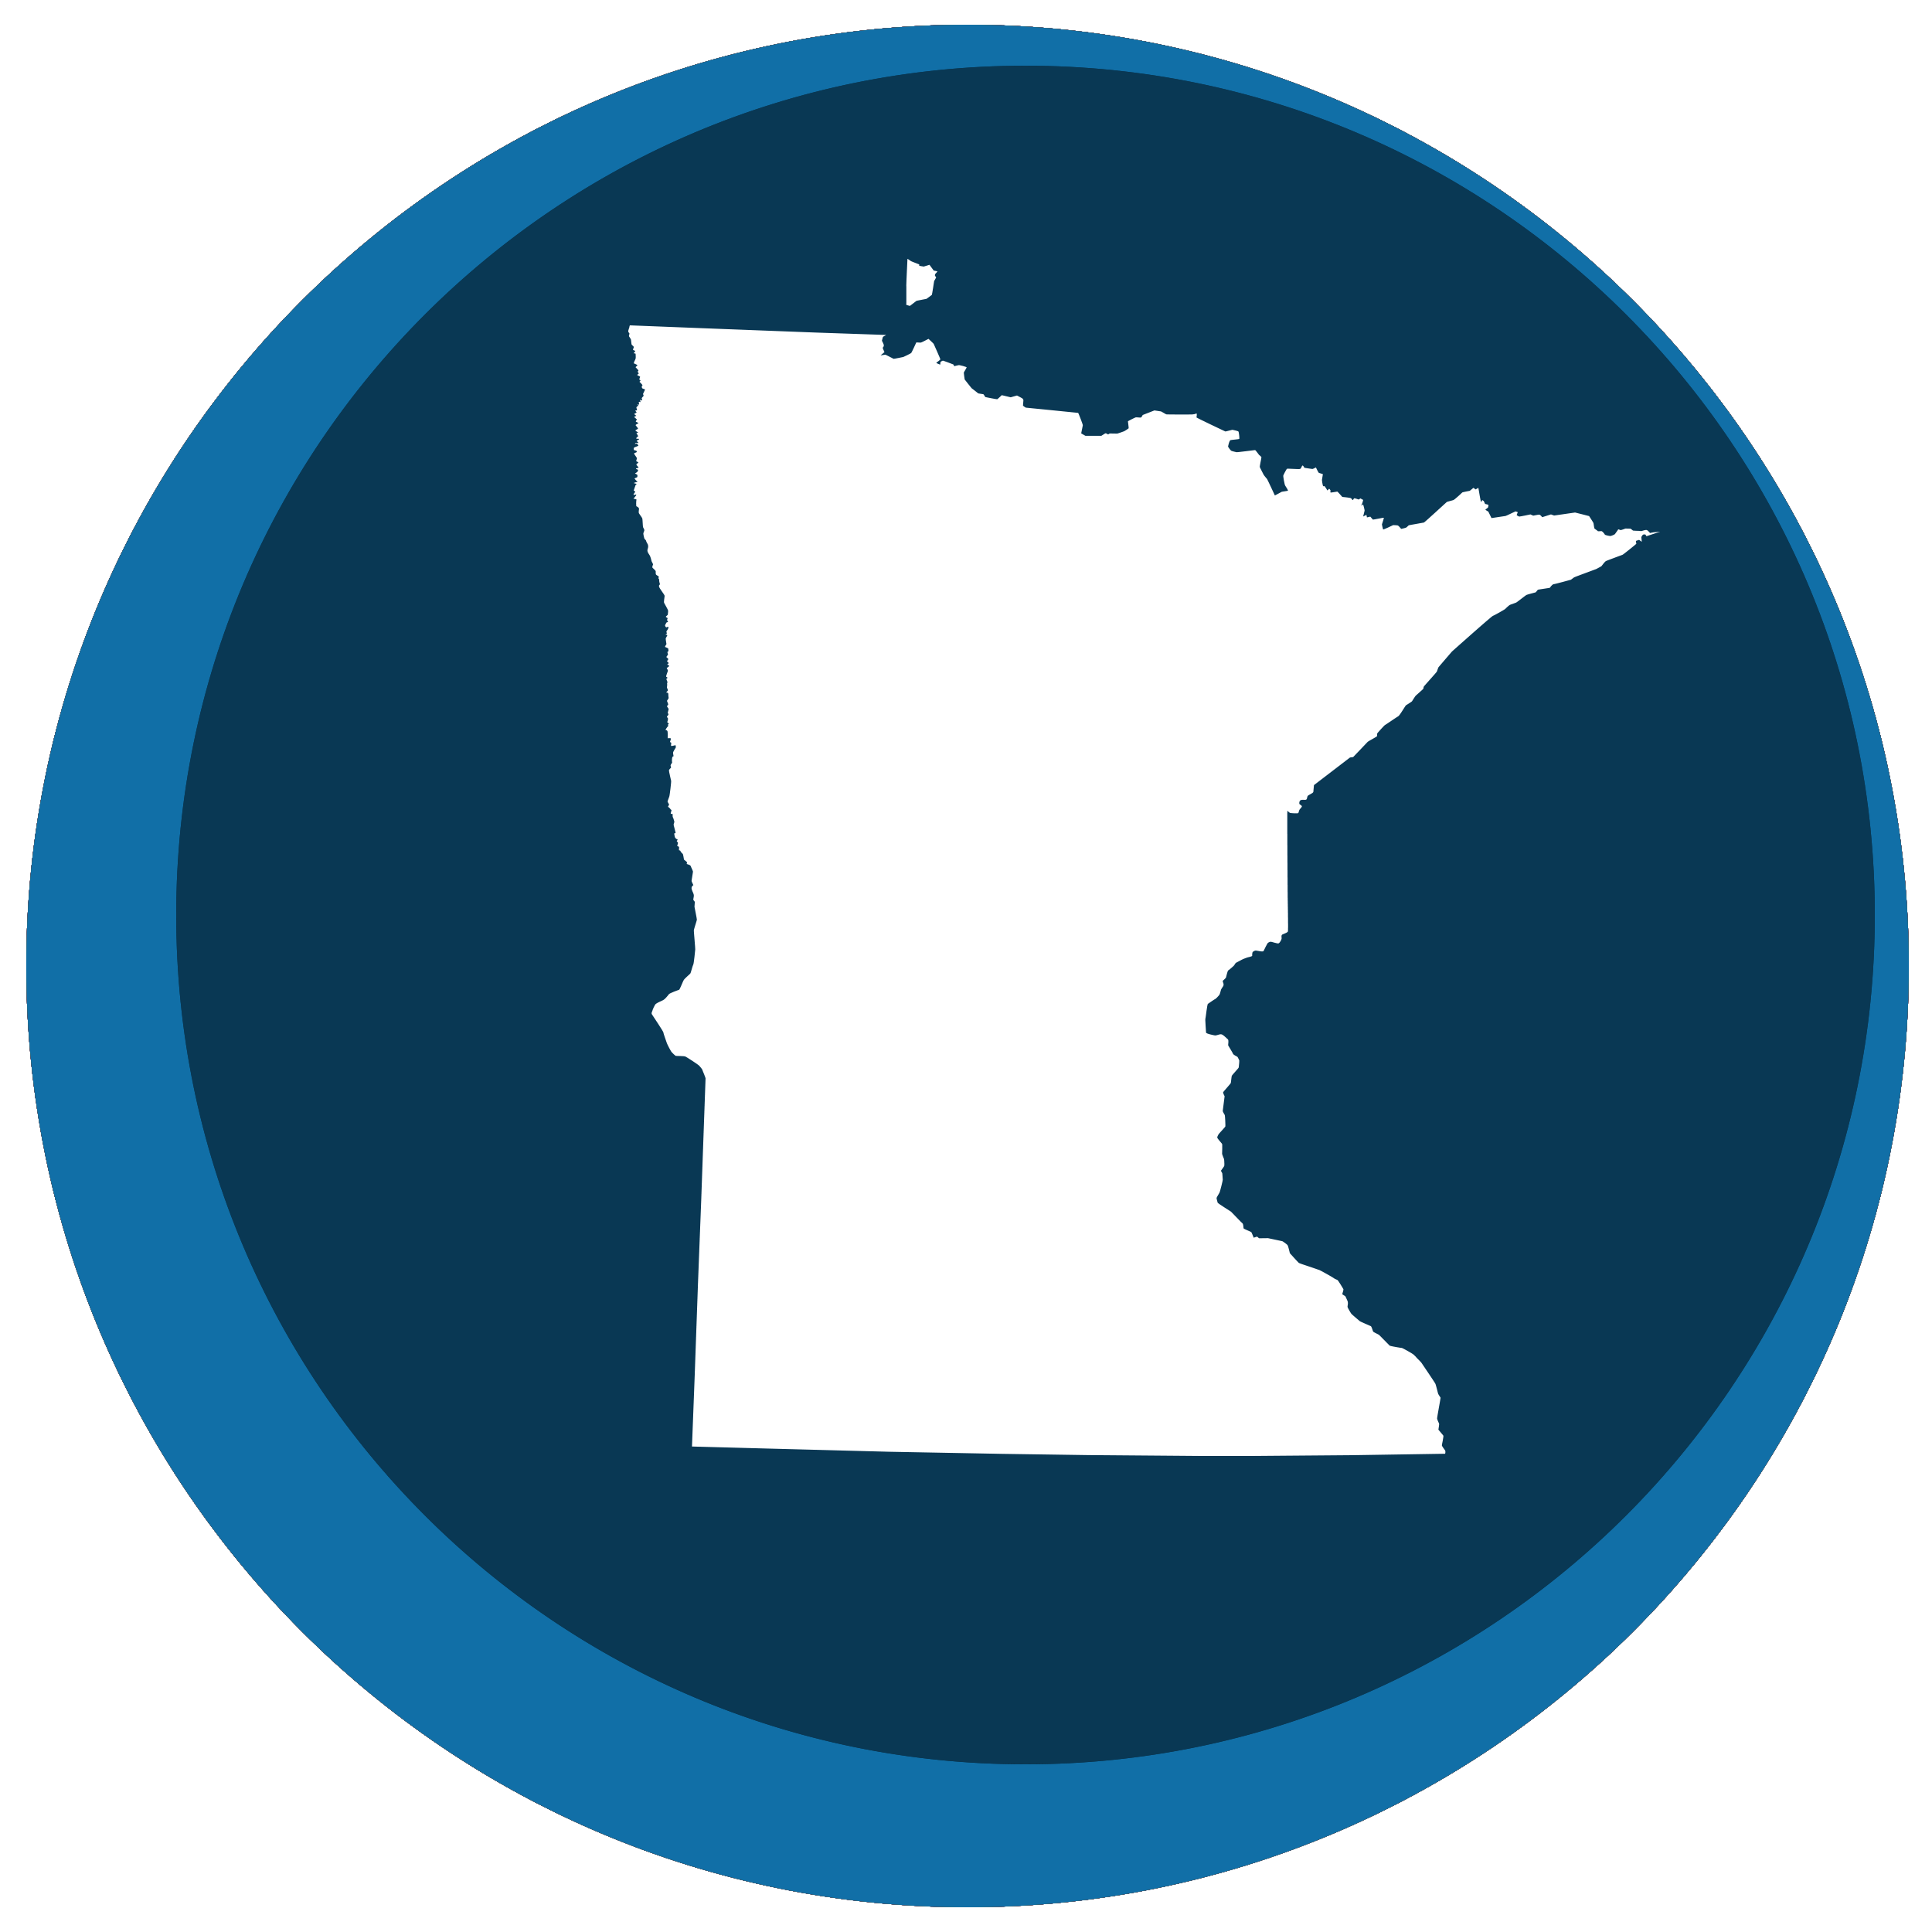 Minnesota state shape in a circle